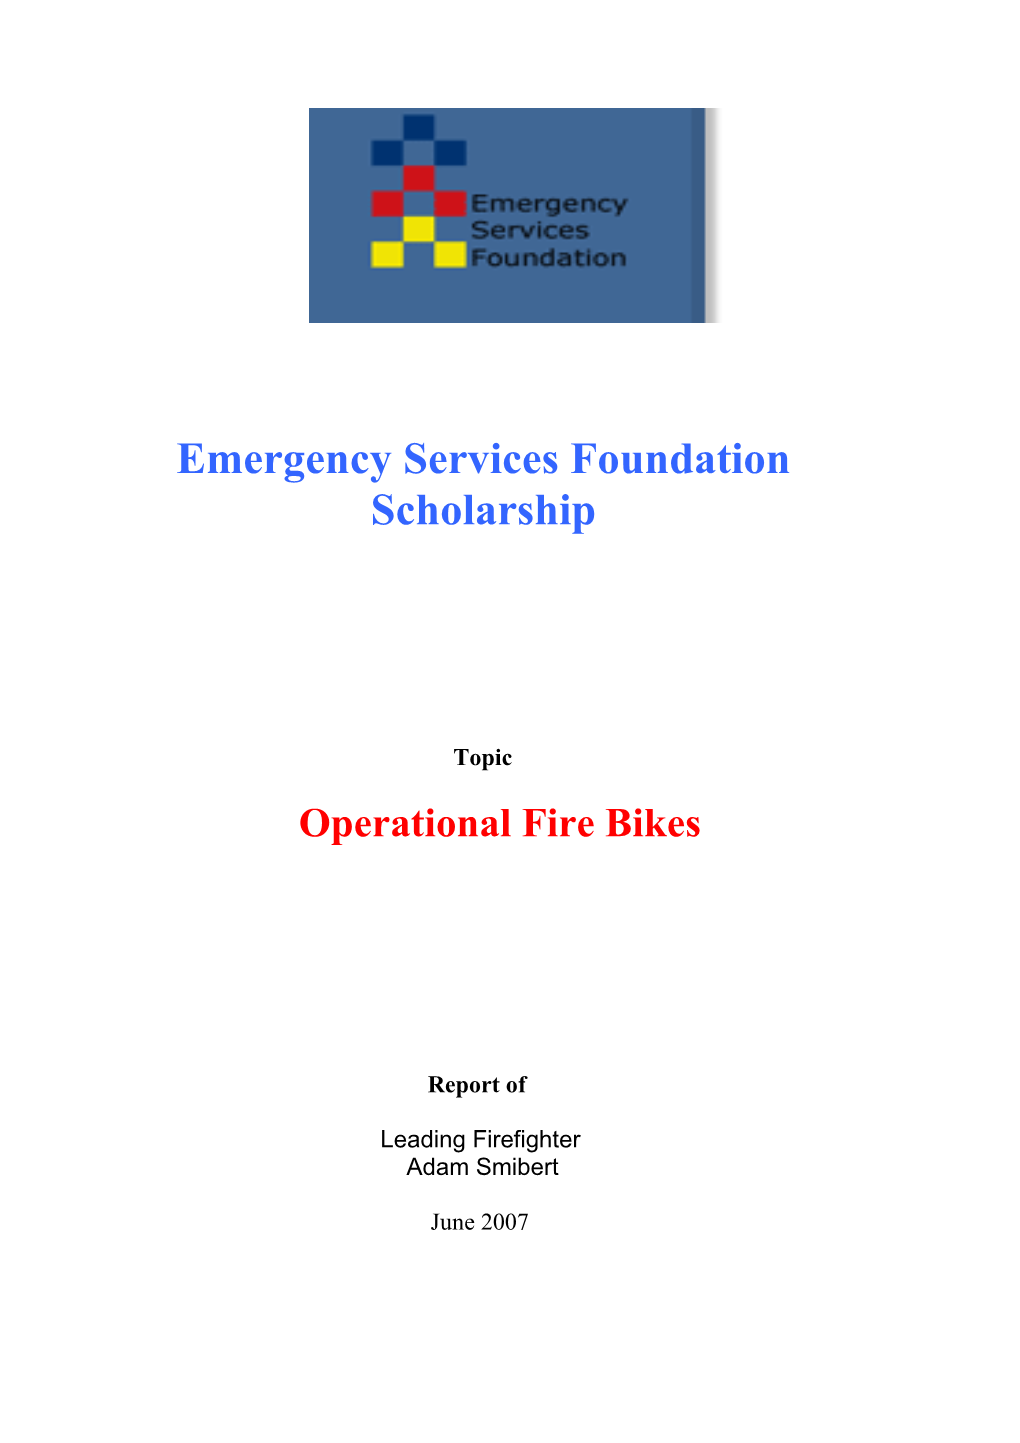 Operational Fire Bikes